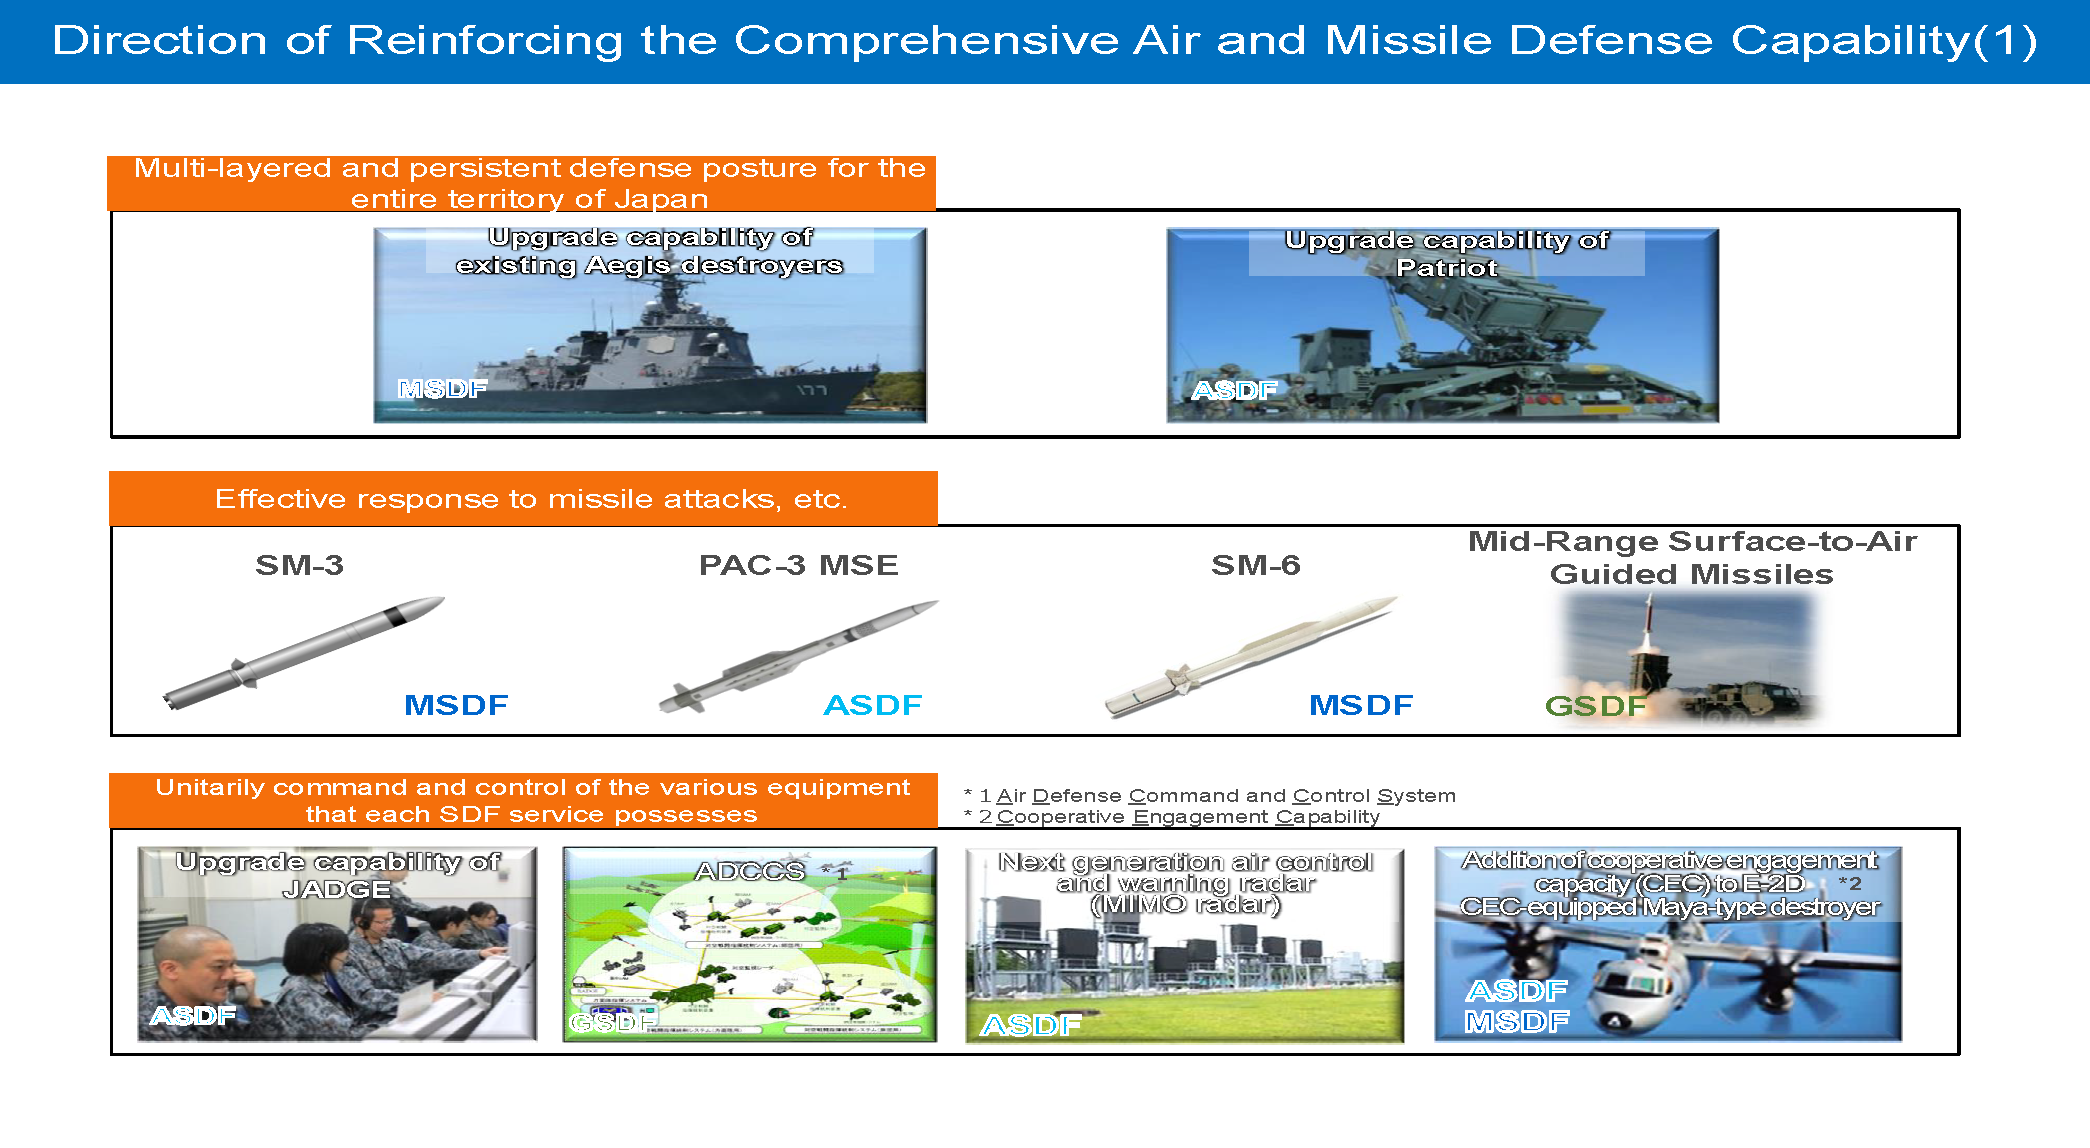 missile_defense_img15.png